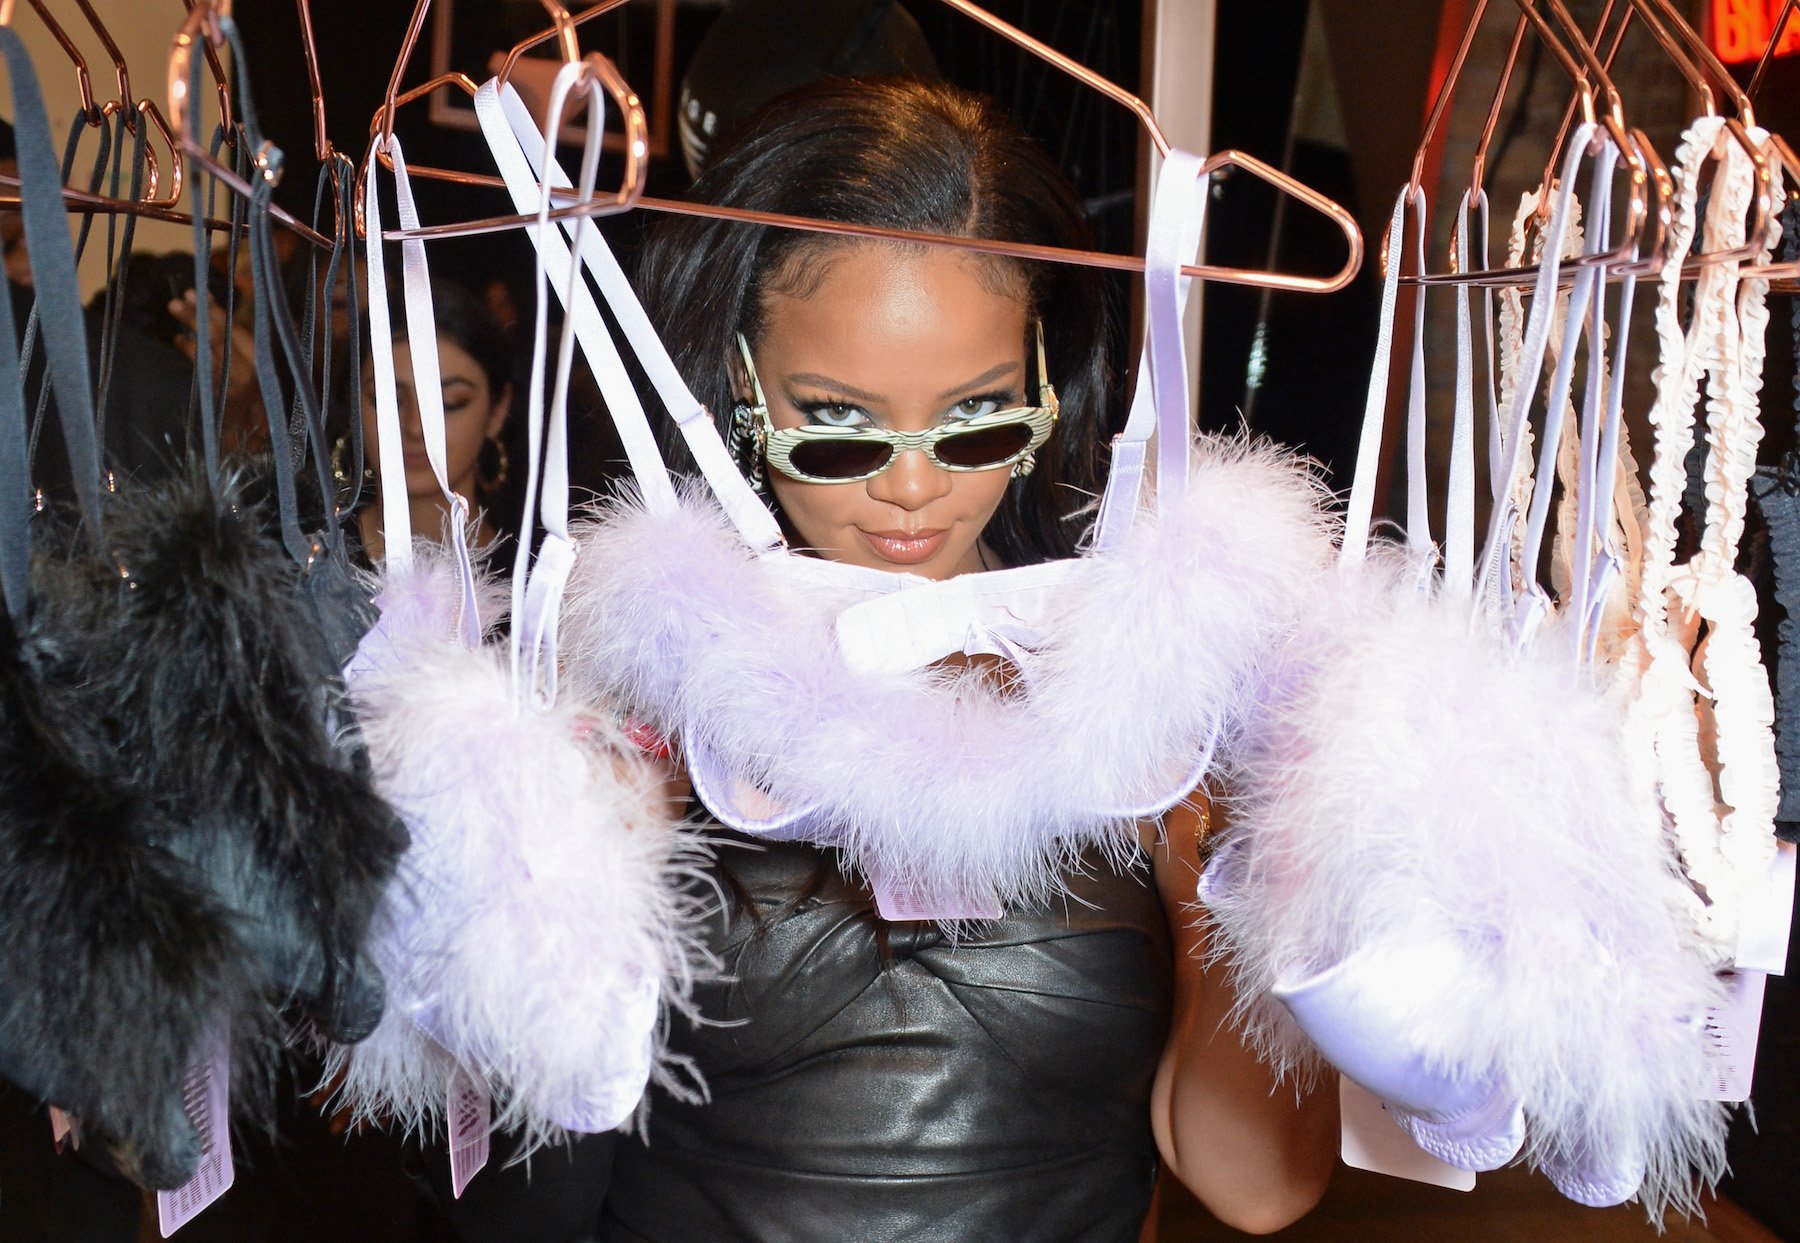 Super Bowl halftime performer Rihanna posing with Savage X Fenty clothing